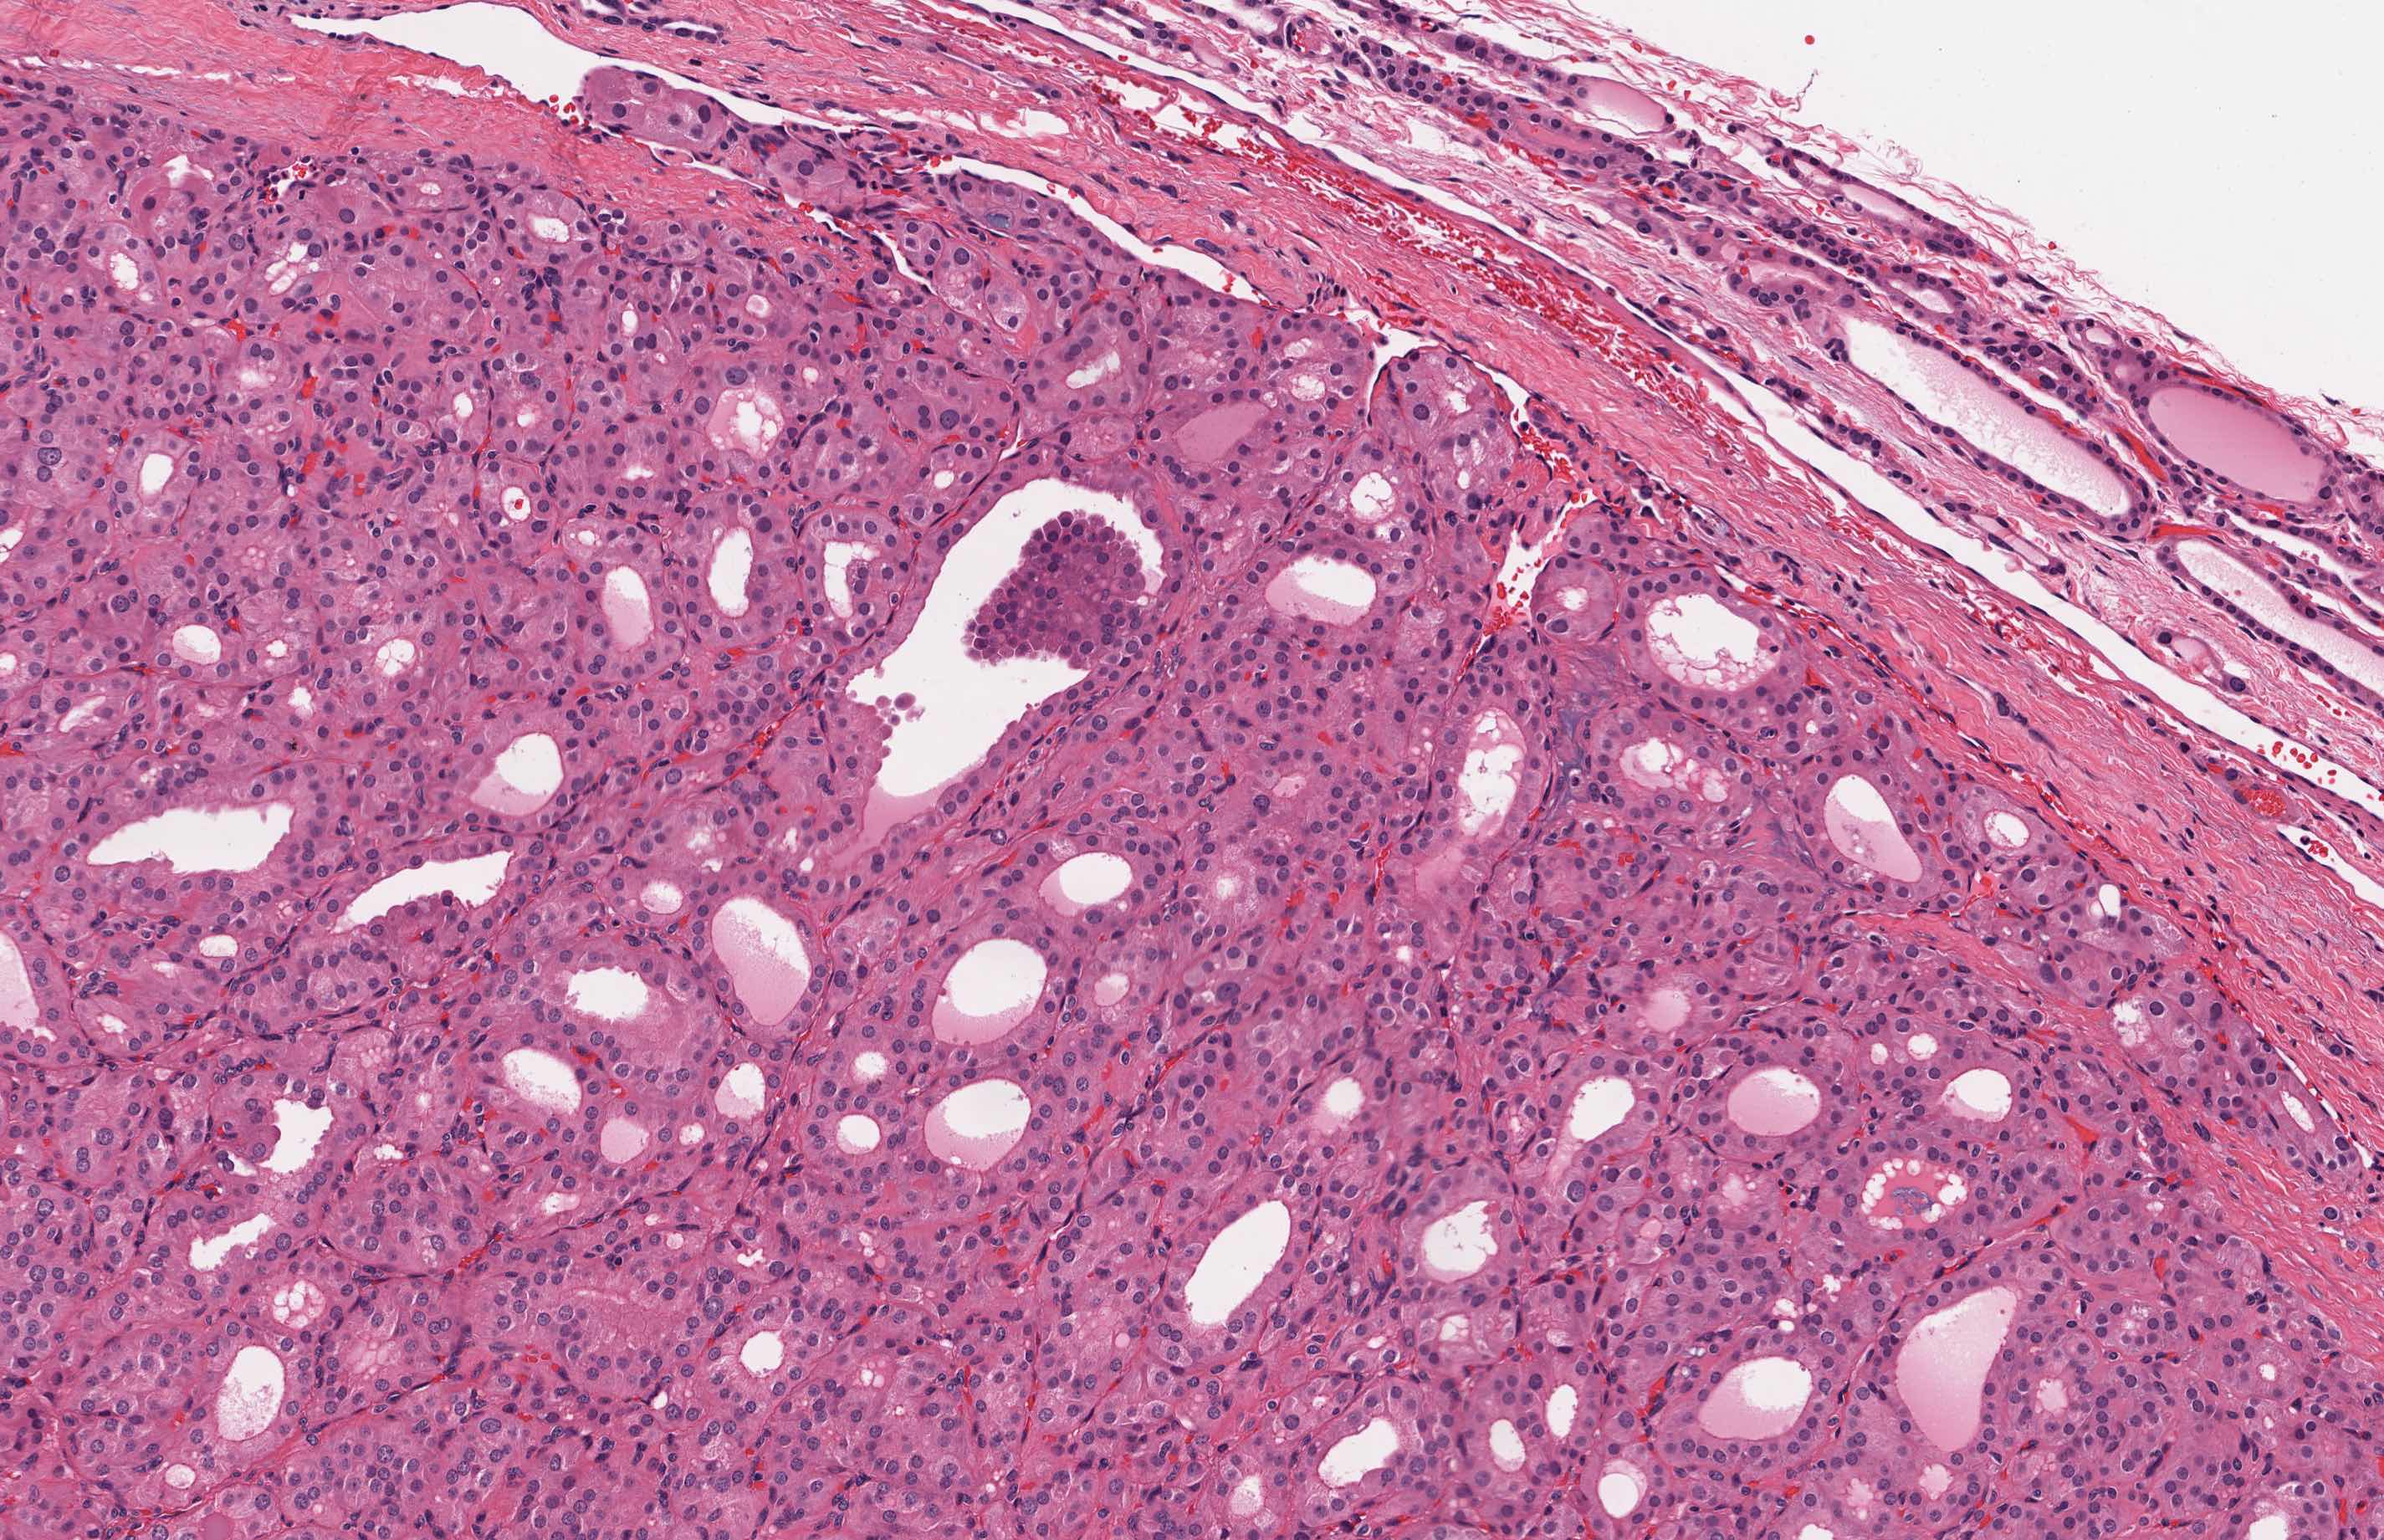 Pathology Outlines - Oncocytic (Hürthle cell) tumors